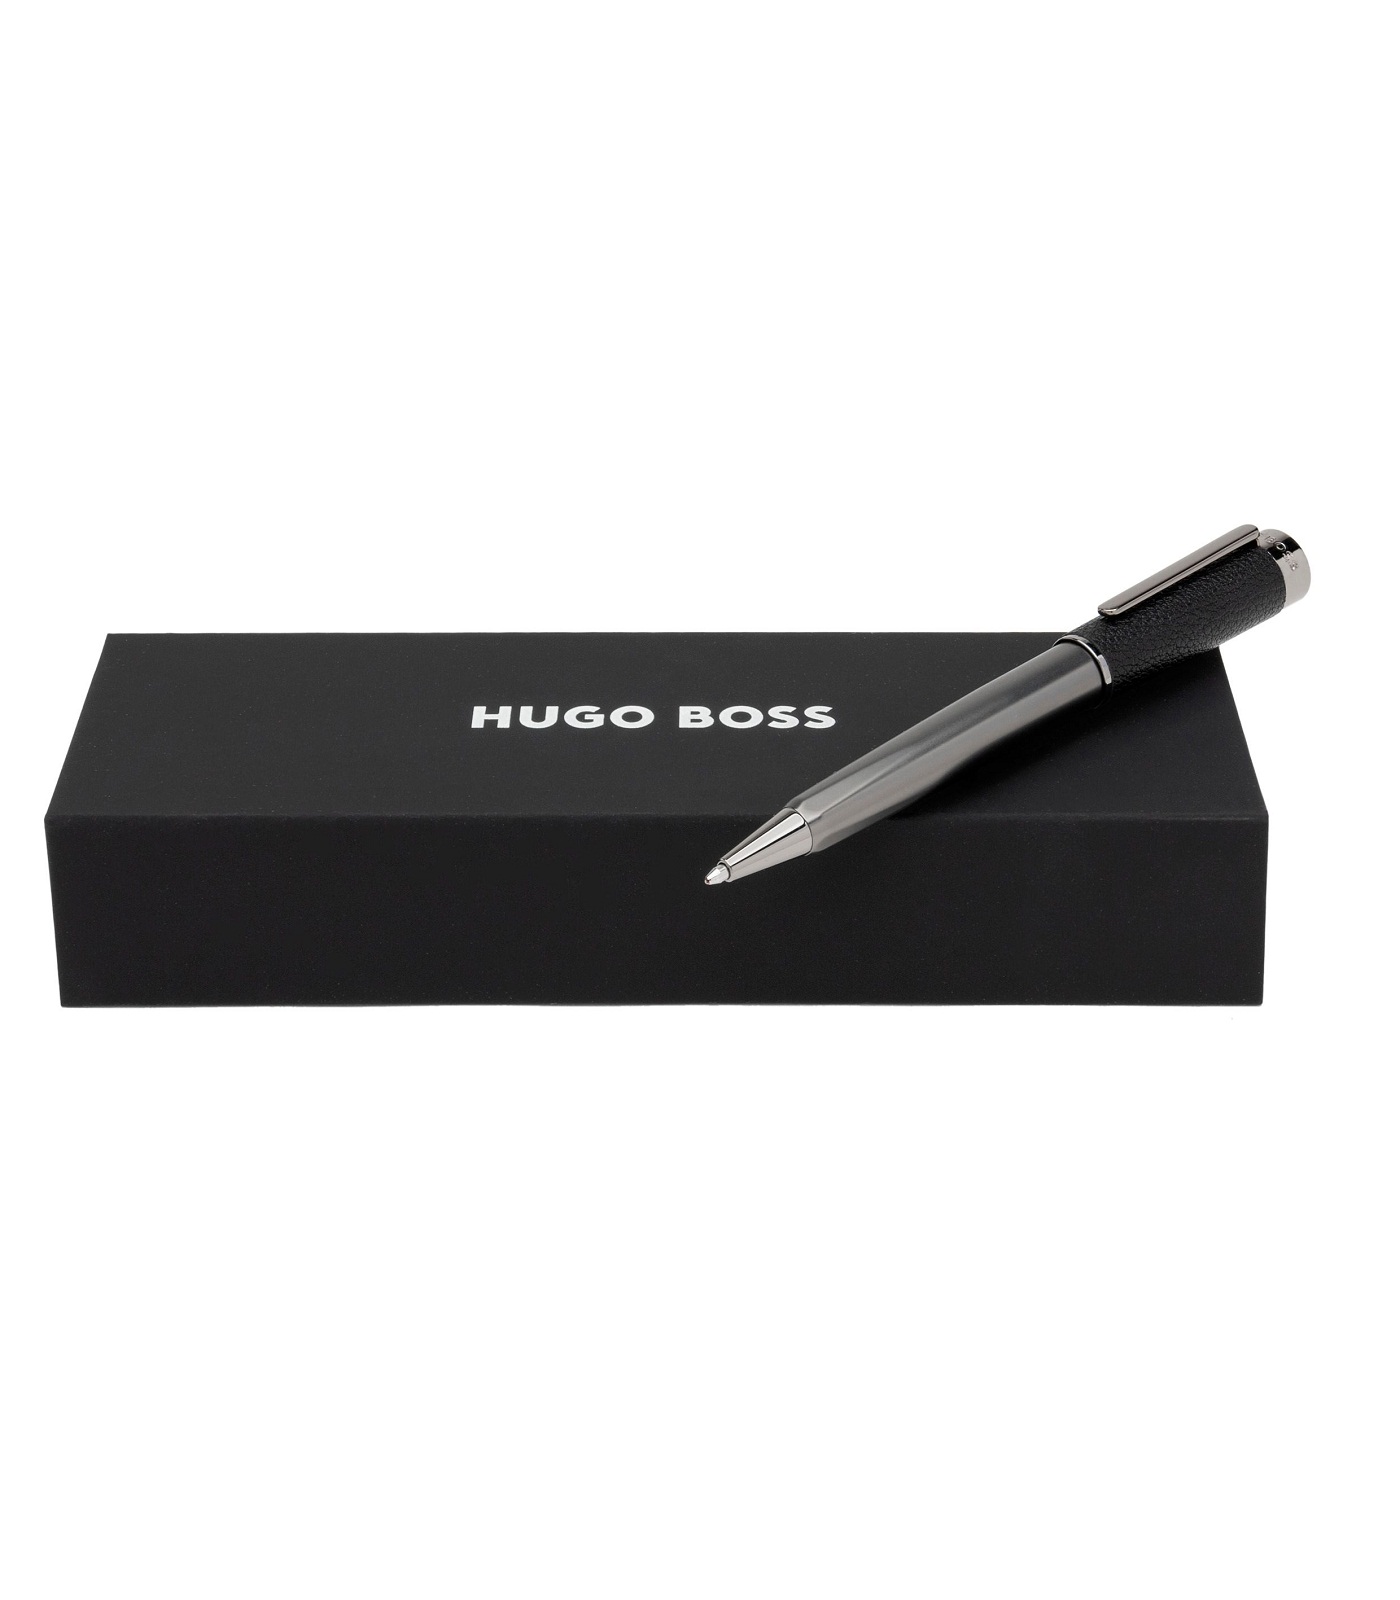 HUGO BOSS Ballpoint pen Corium Black - Stationery | Office Supplies ...